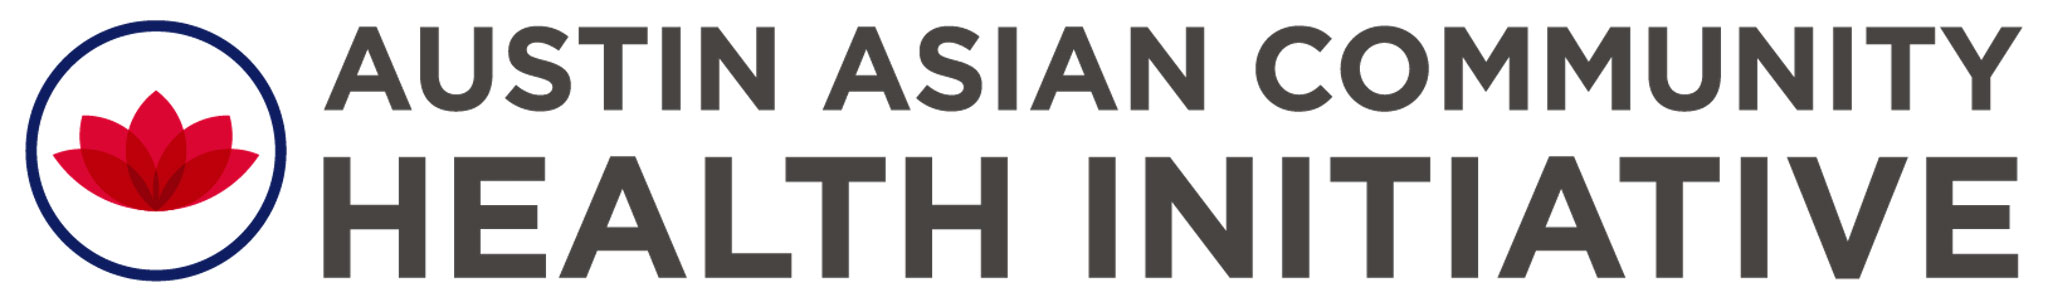 Featured Client Austin Asian Community Health Initiative